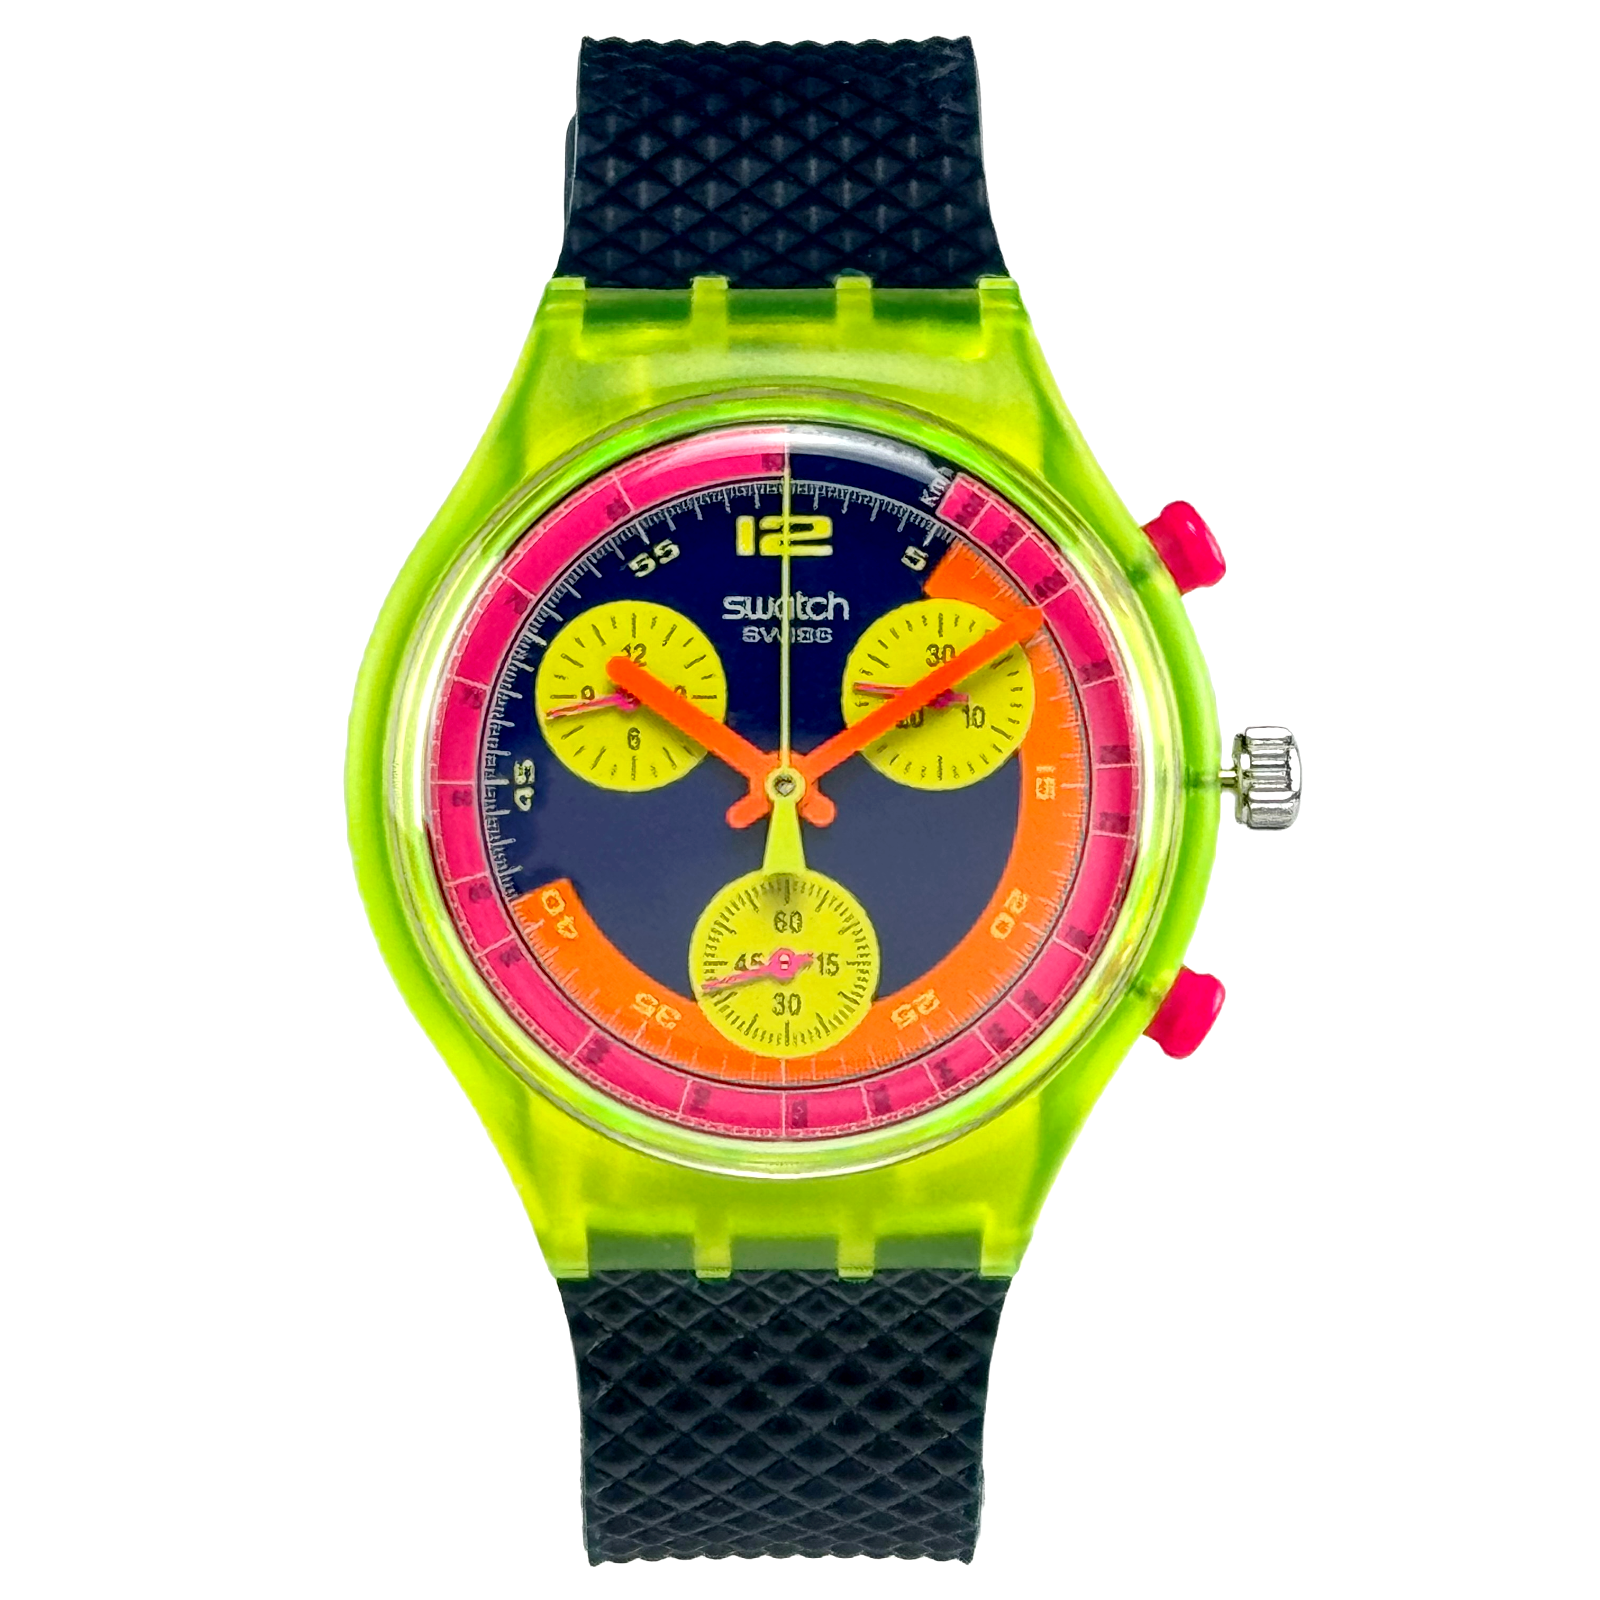  Swatch Vintage Neon Chrono Grand Prix Armbanduhr Uhr SCJ101 1992 mit Km/h